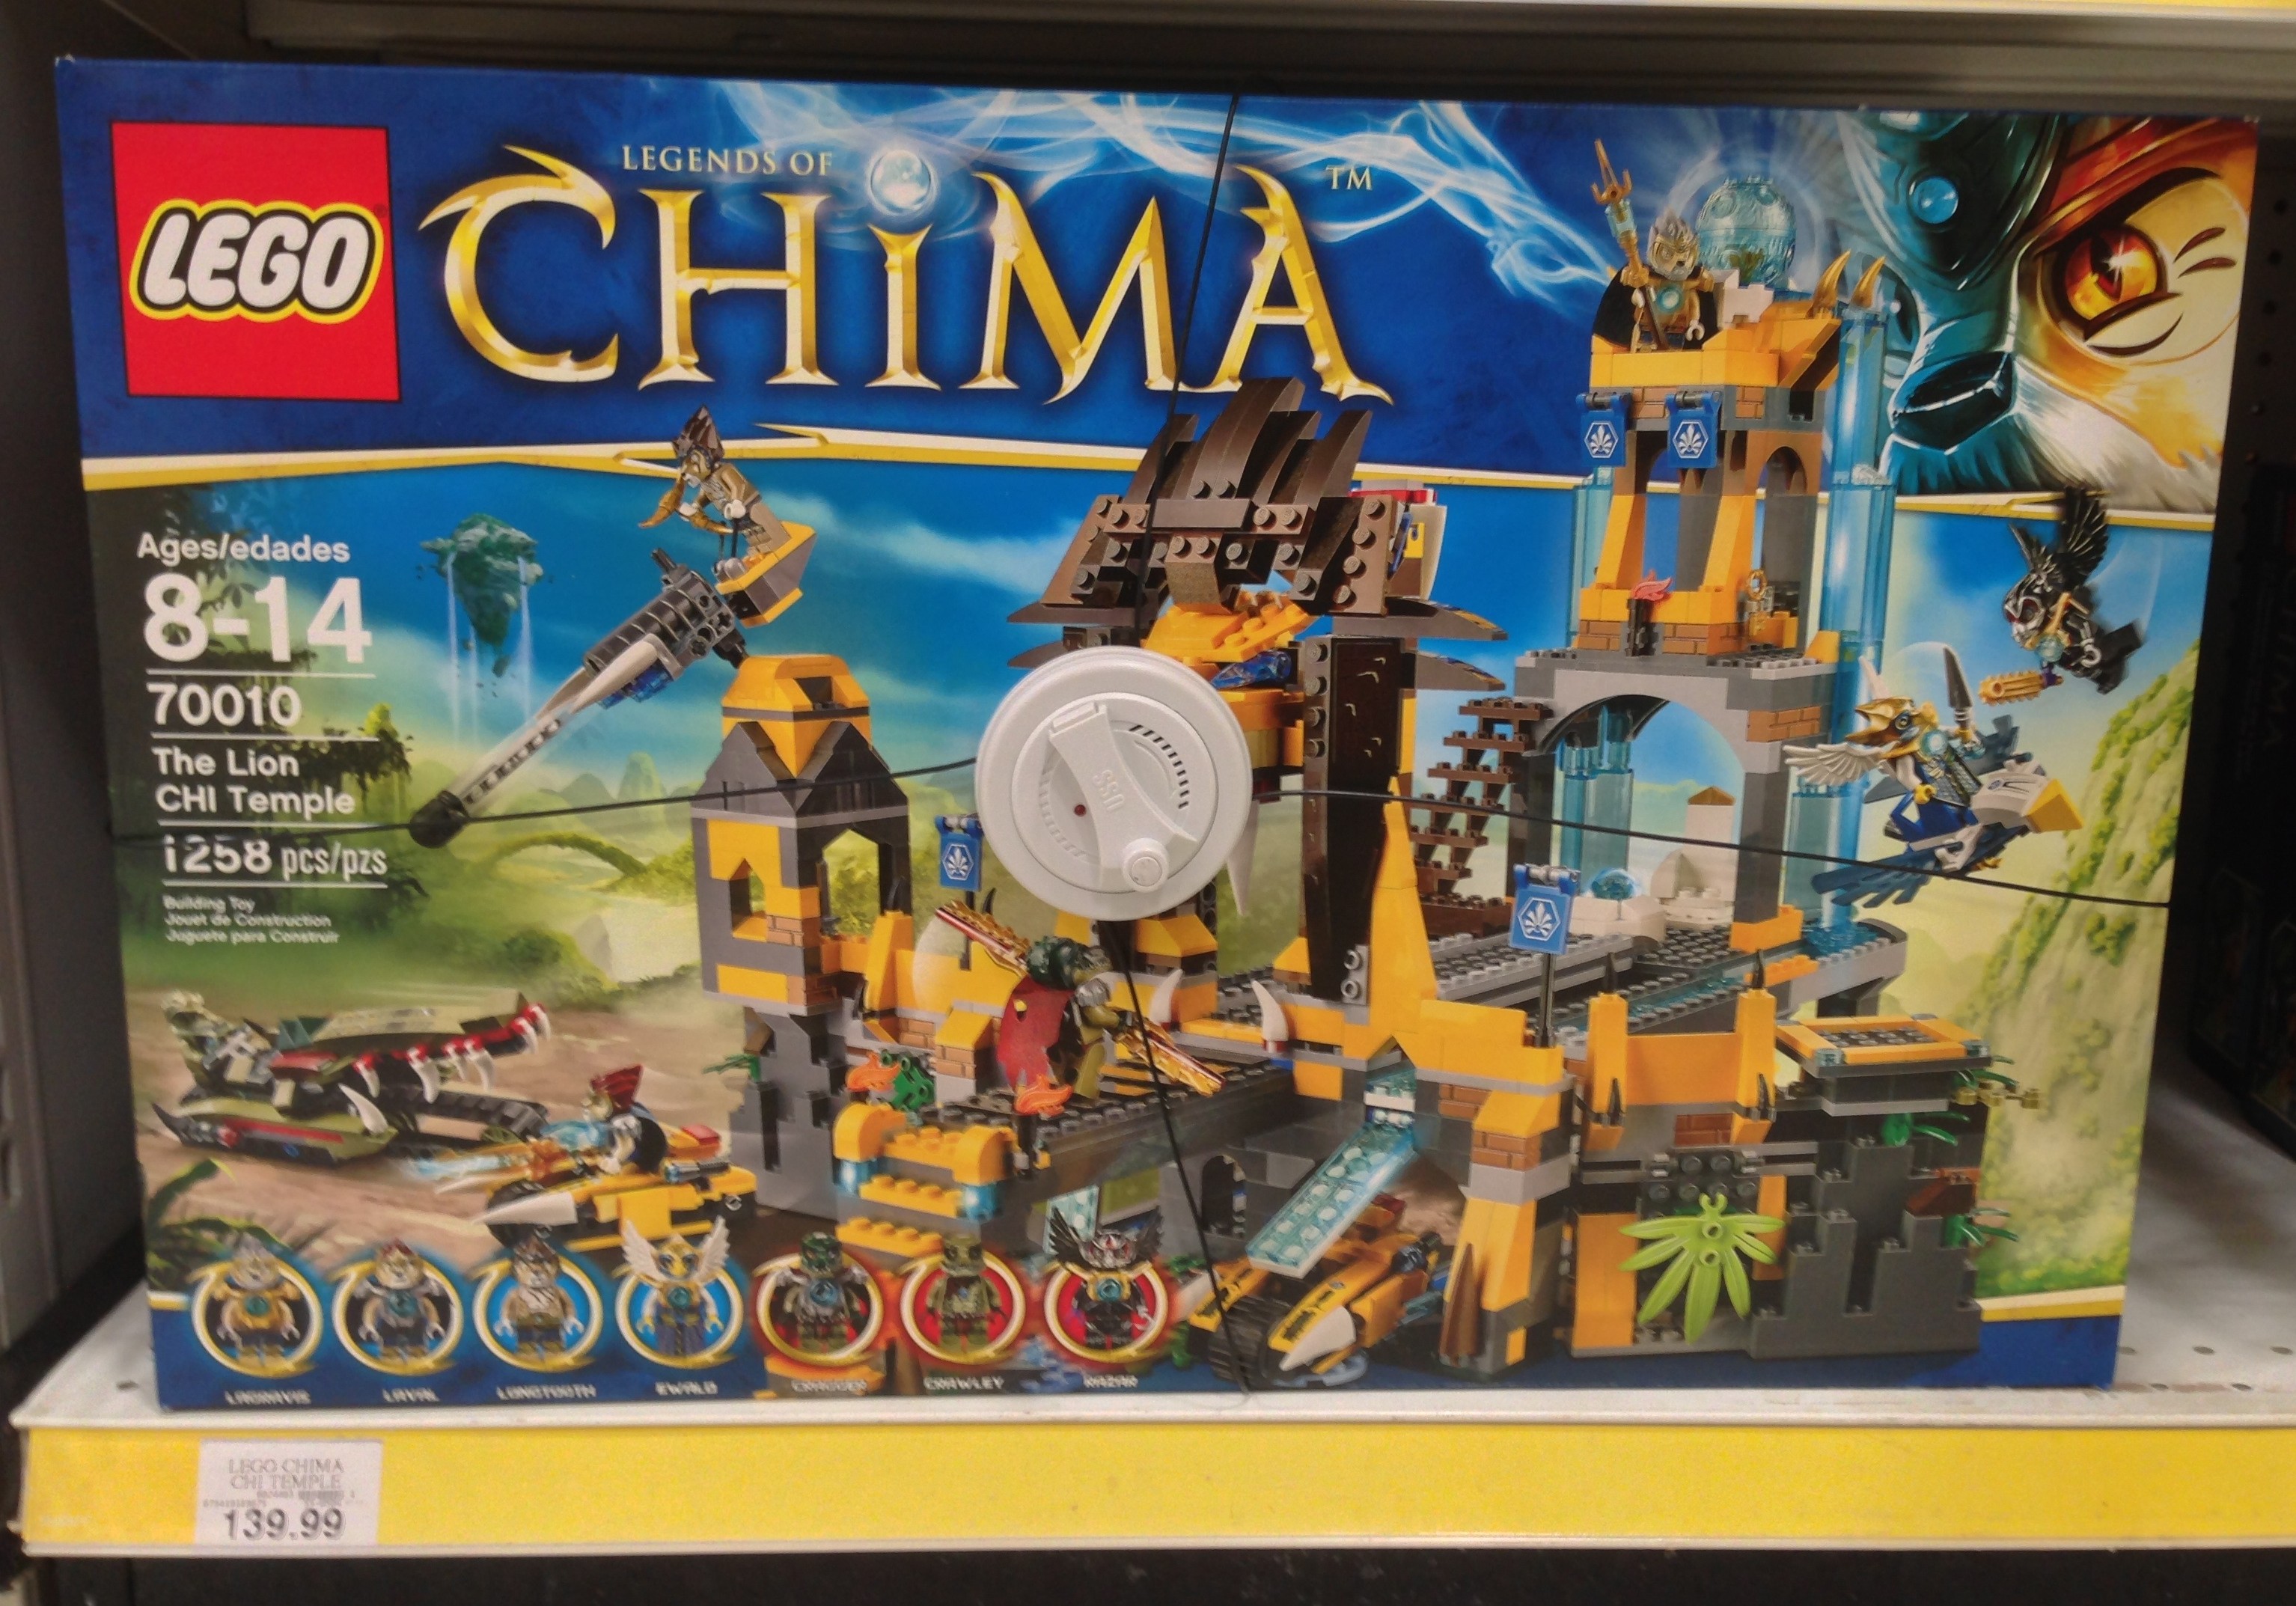 2013 LEGO Legends of Chima Summer Sets Released (with Bricks Bloks